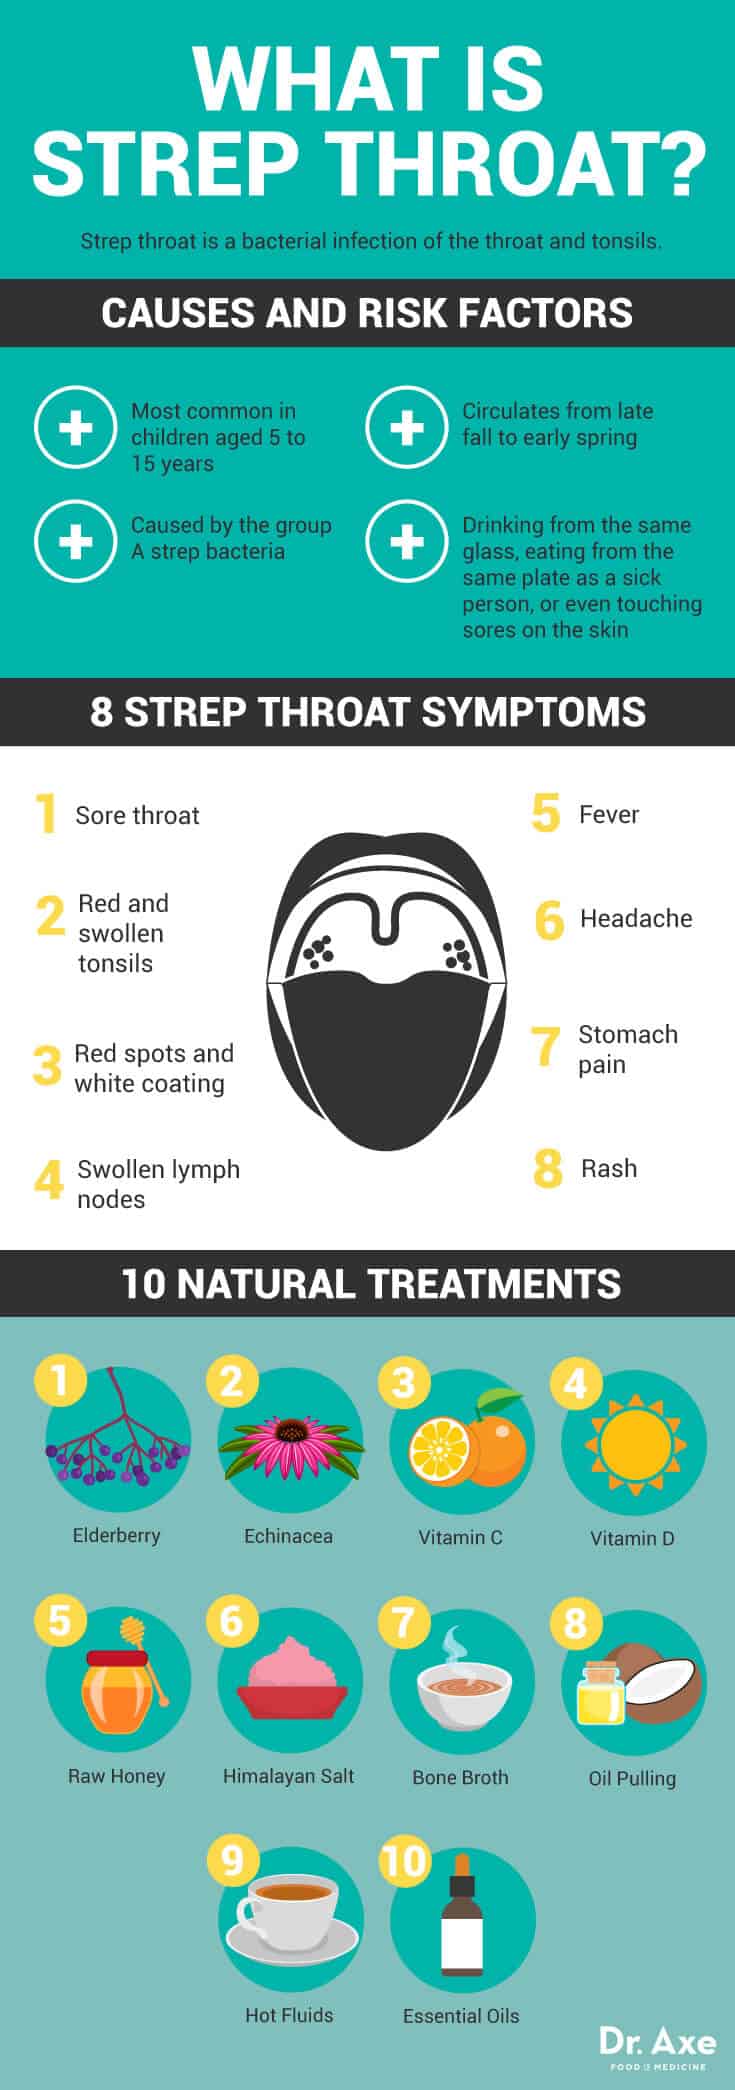 Strep throat symptoms & treatments